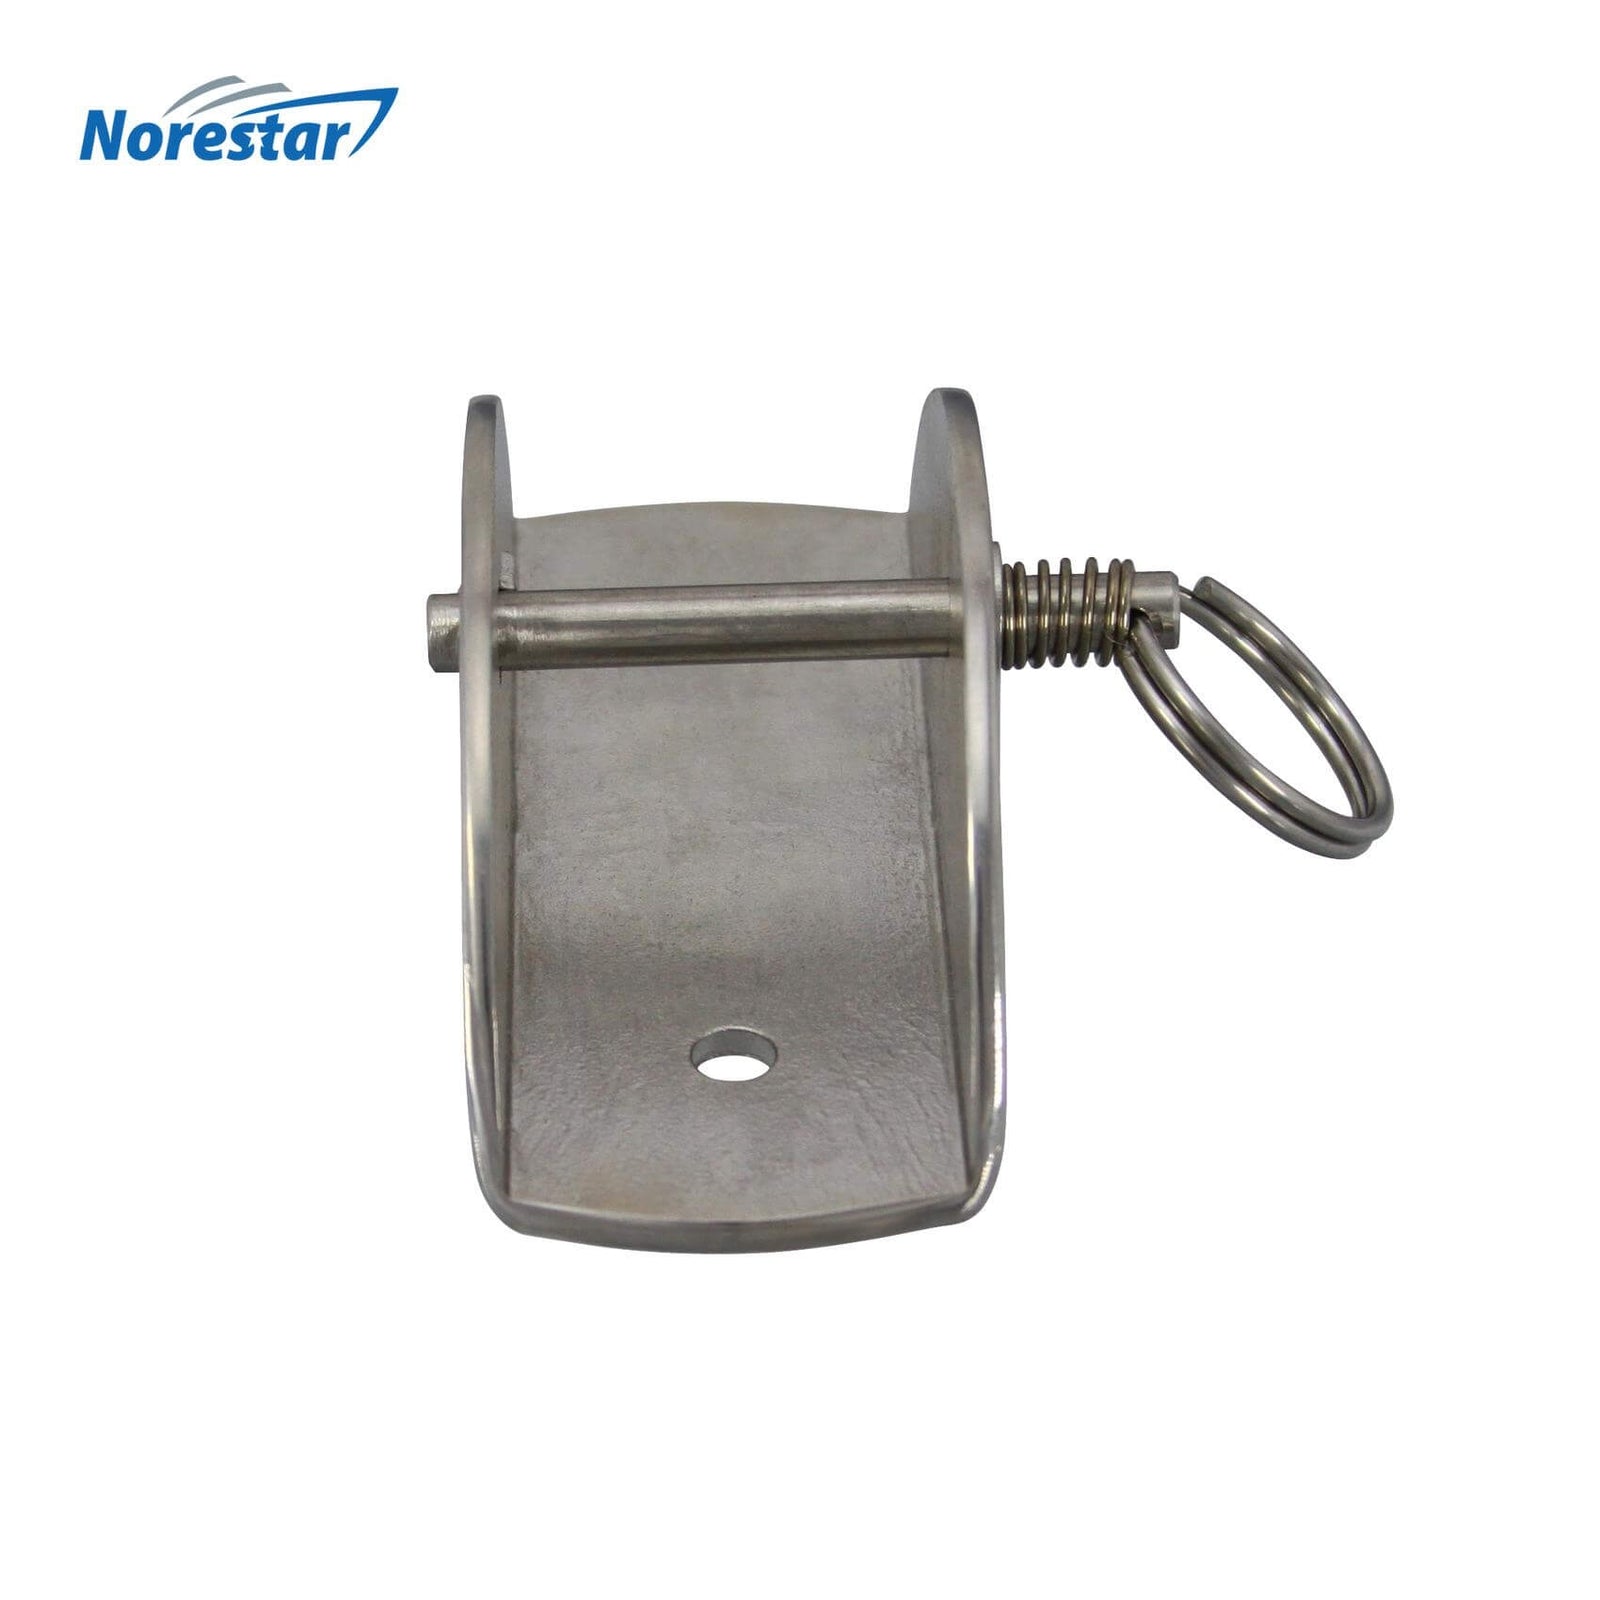 Norestar Anchor/Chain Lock –